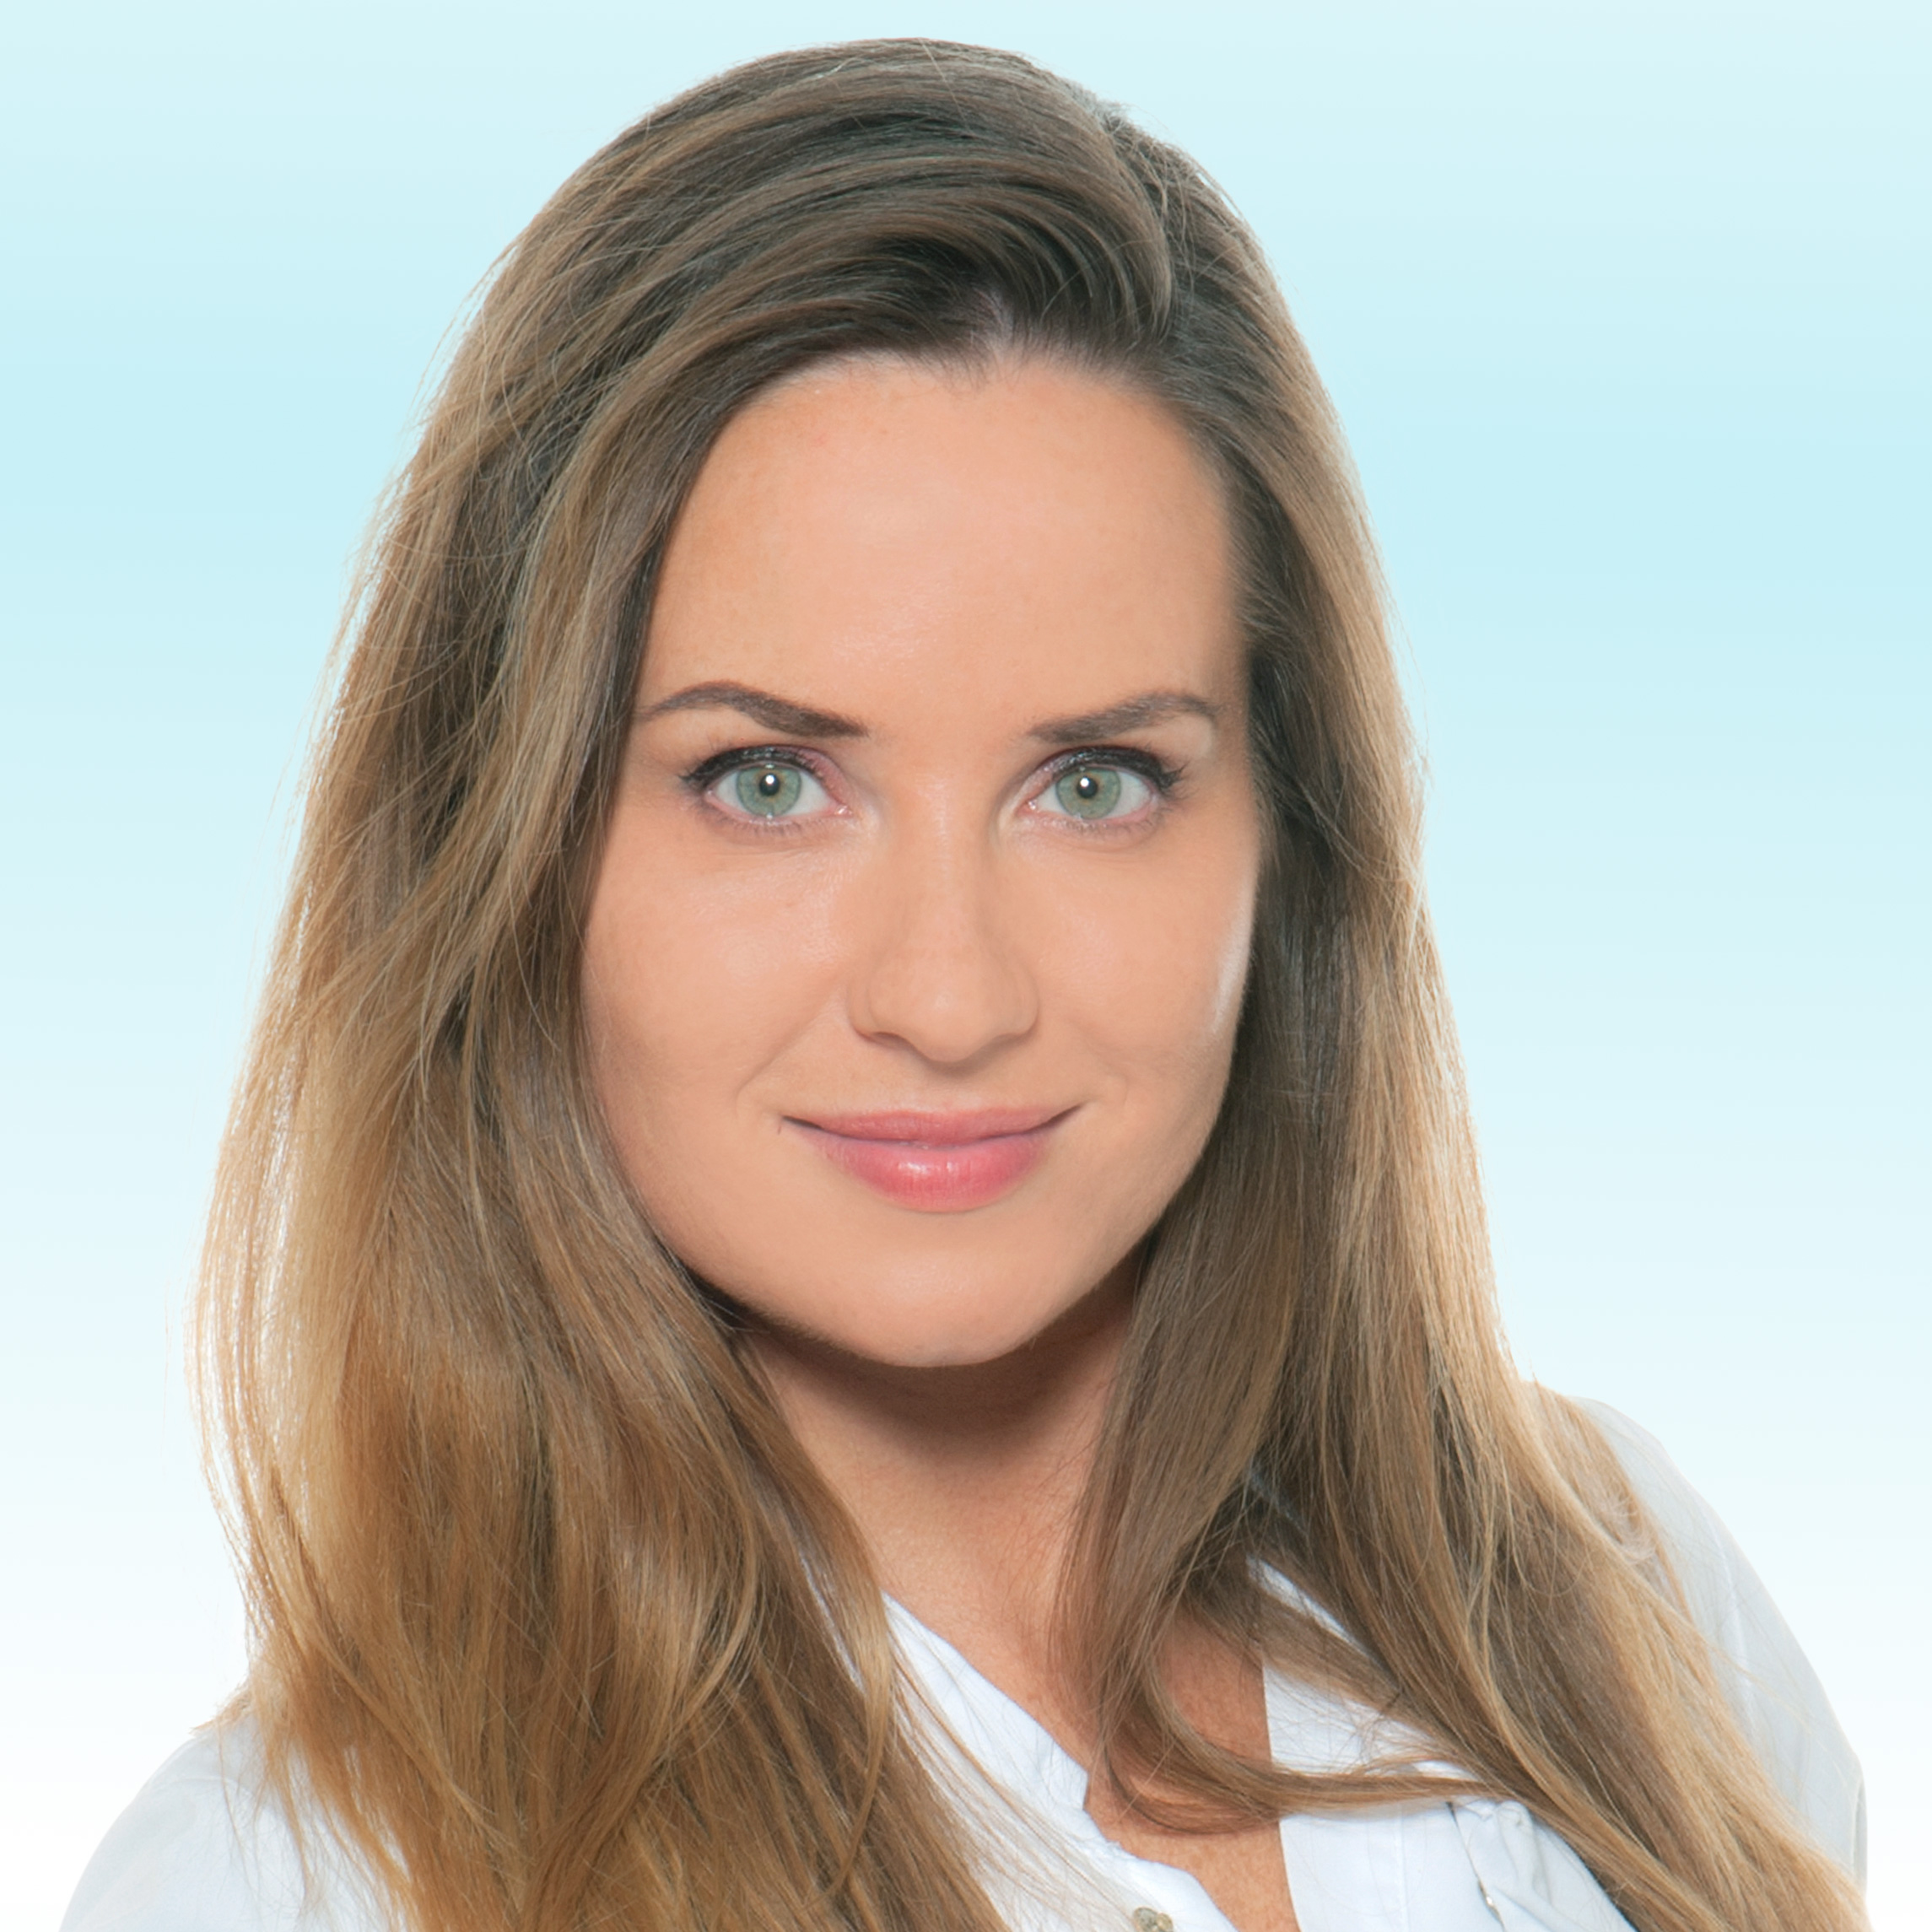 Dermatologist, Dr. Franziska Wenz